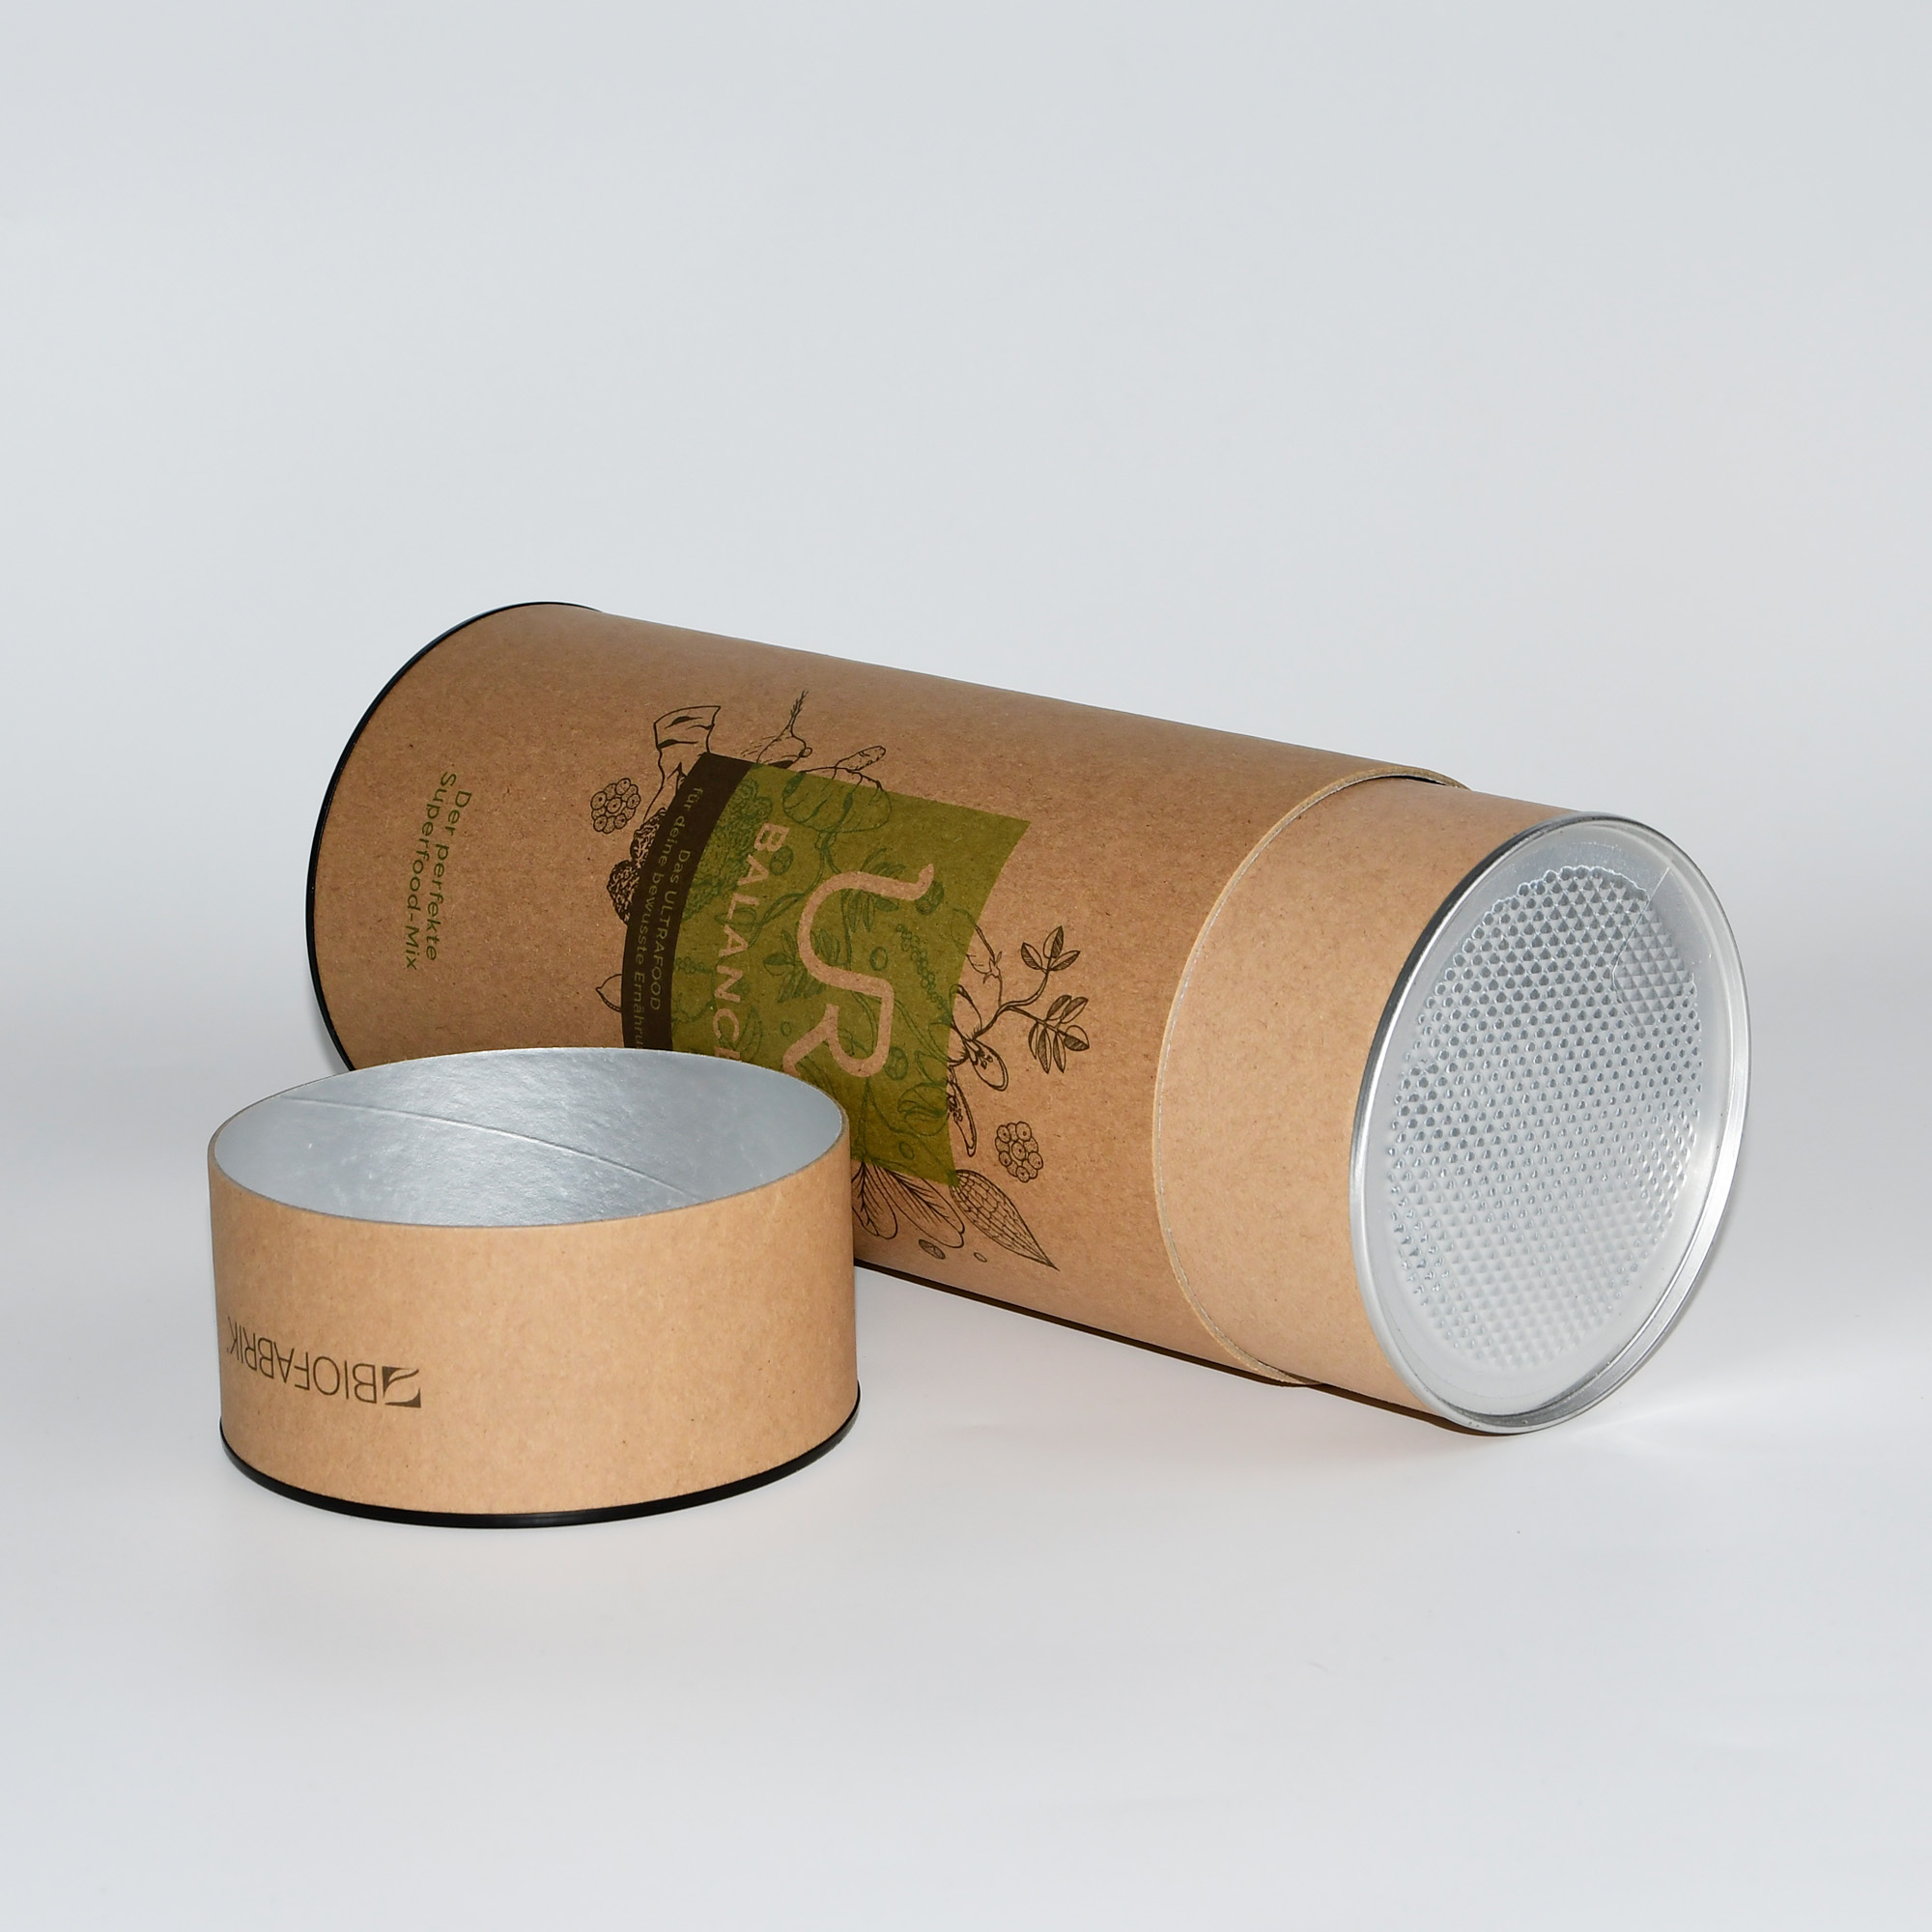 Superfood Paper Tube Packaging